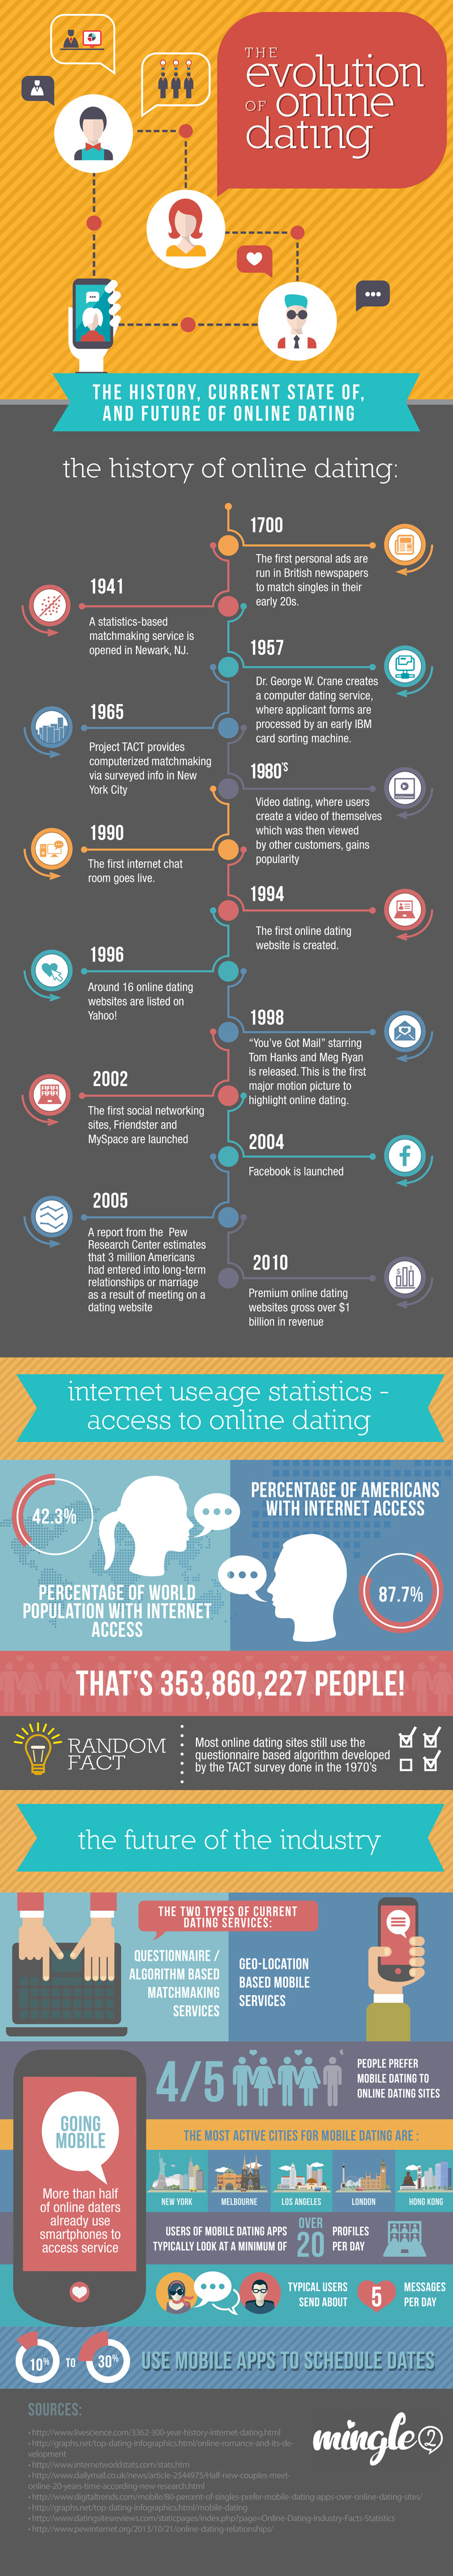 Evolution on Online Dating Infographic